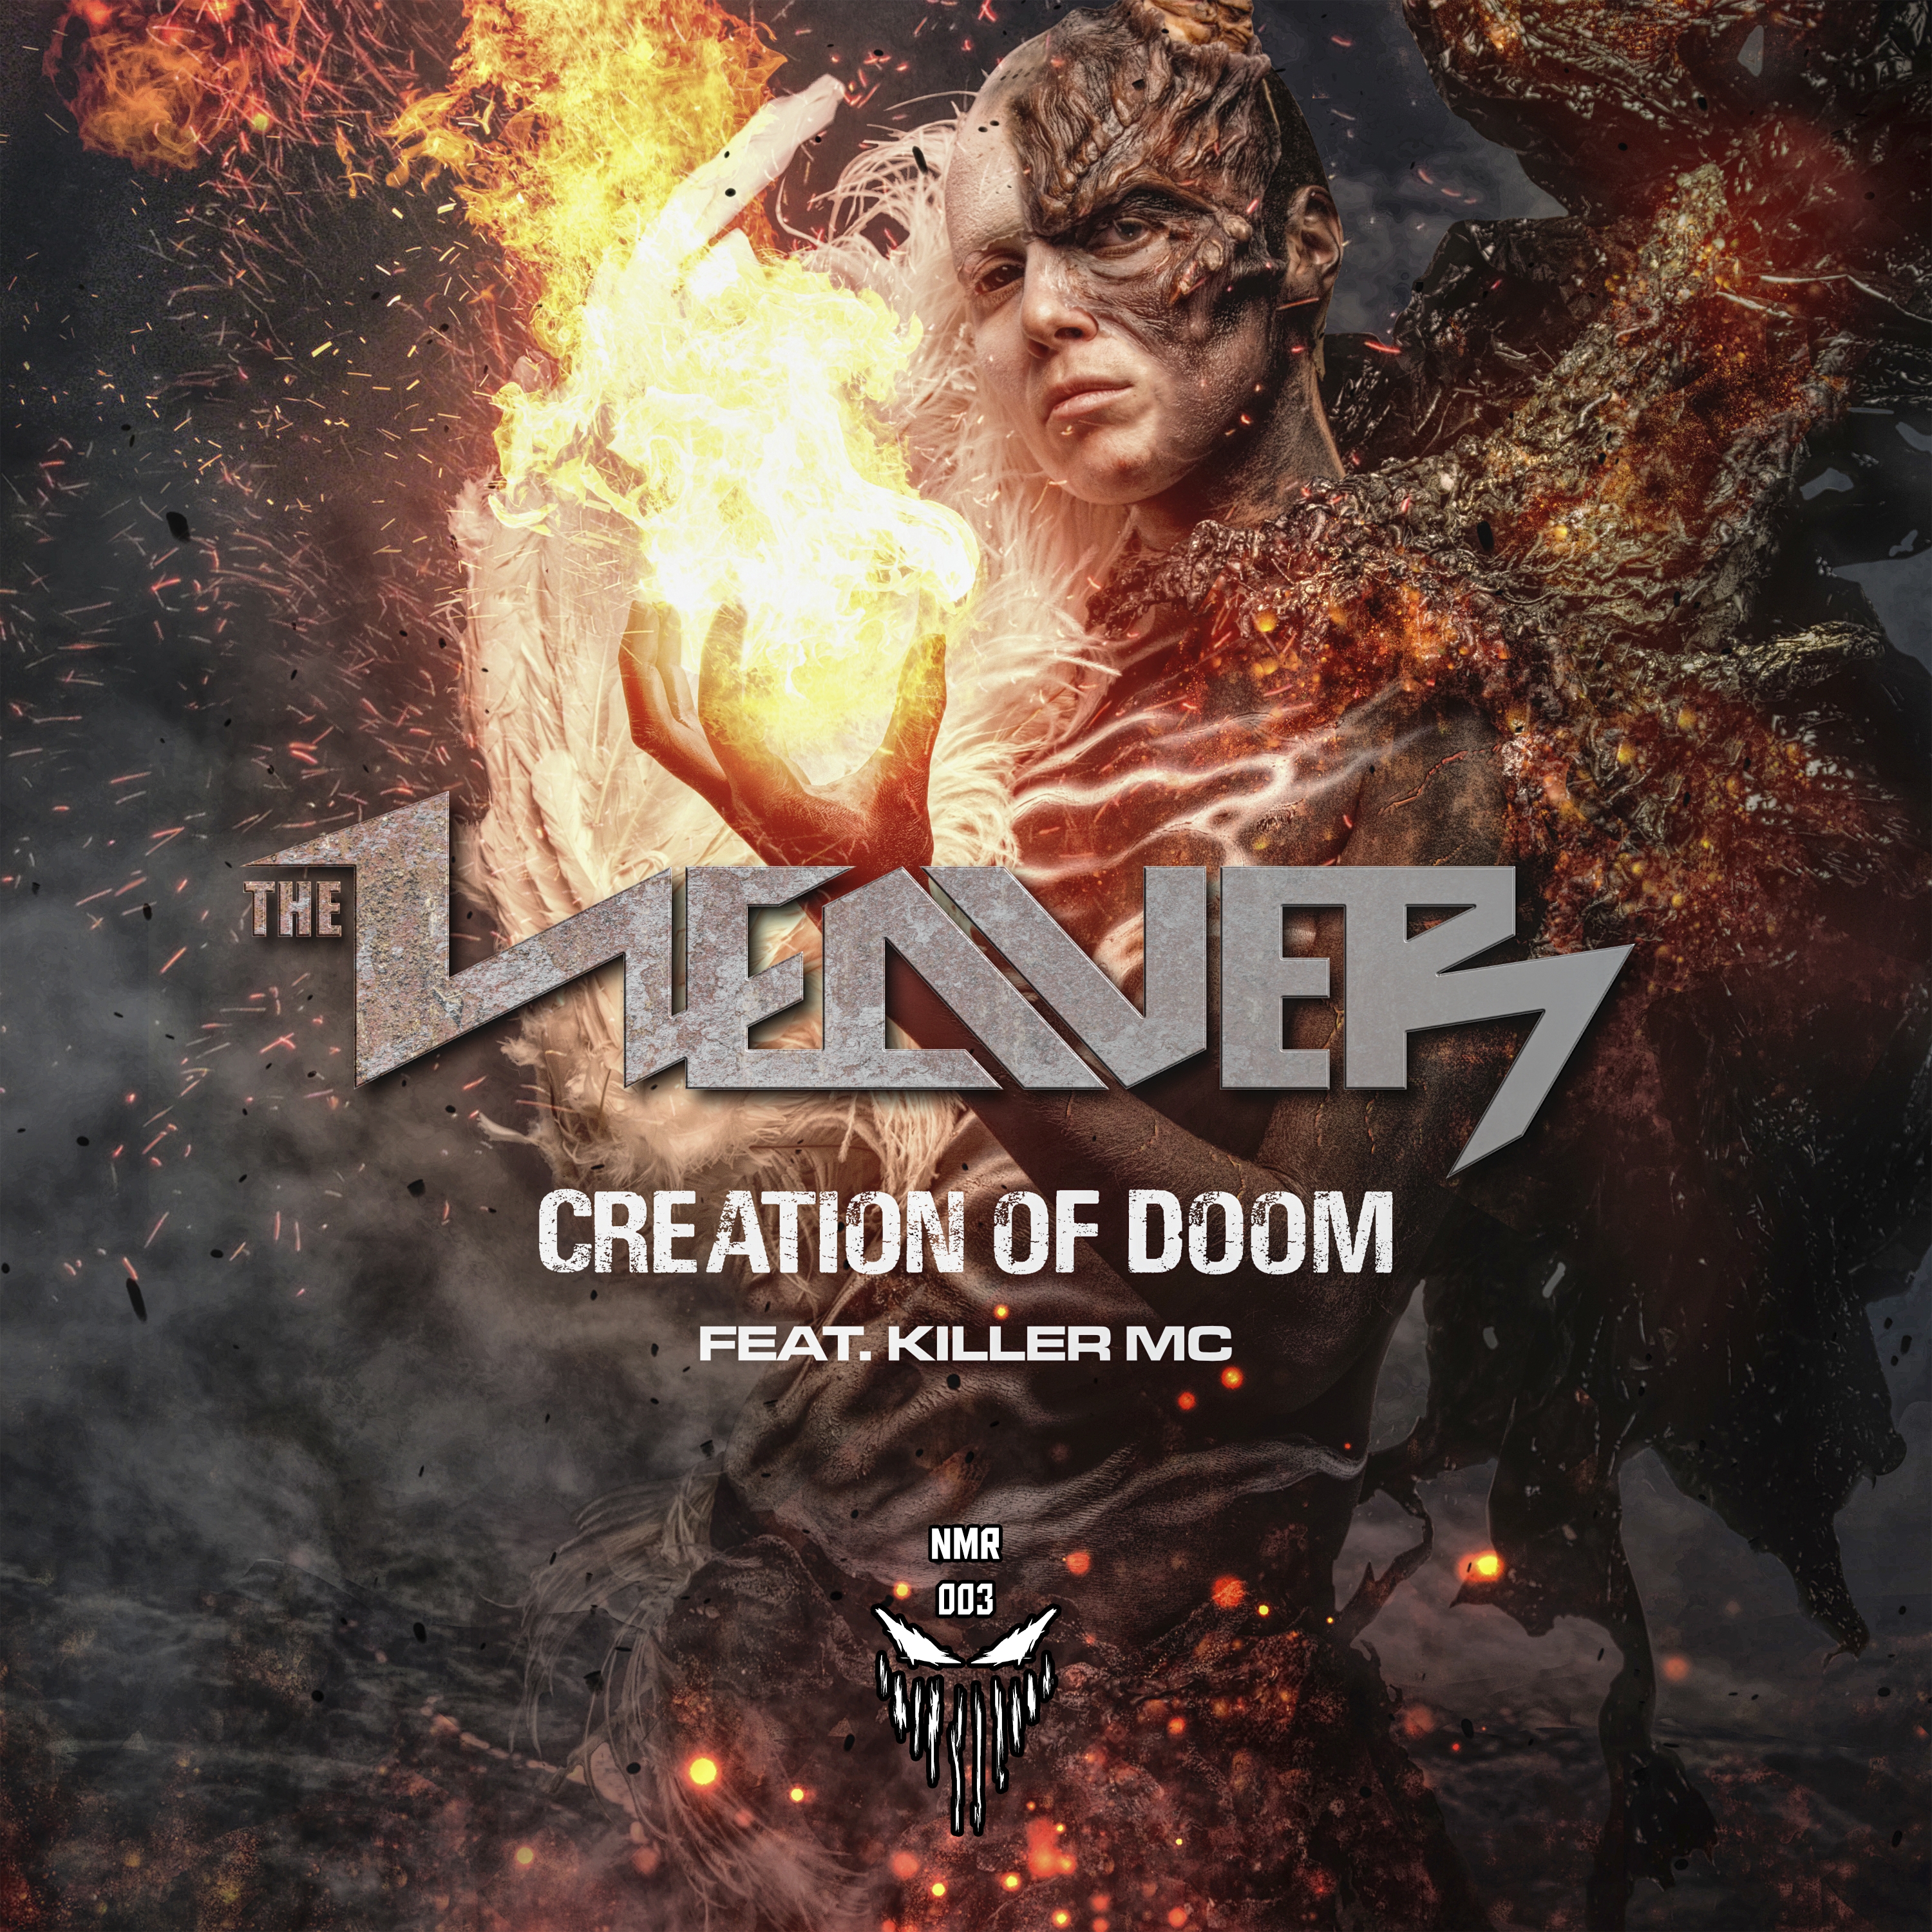 The Weaver Feat. Killer MC - Creation of Doom E.P. - MP3 and WAV ...